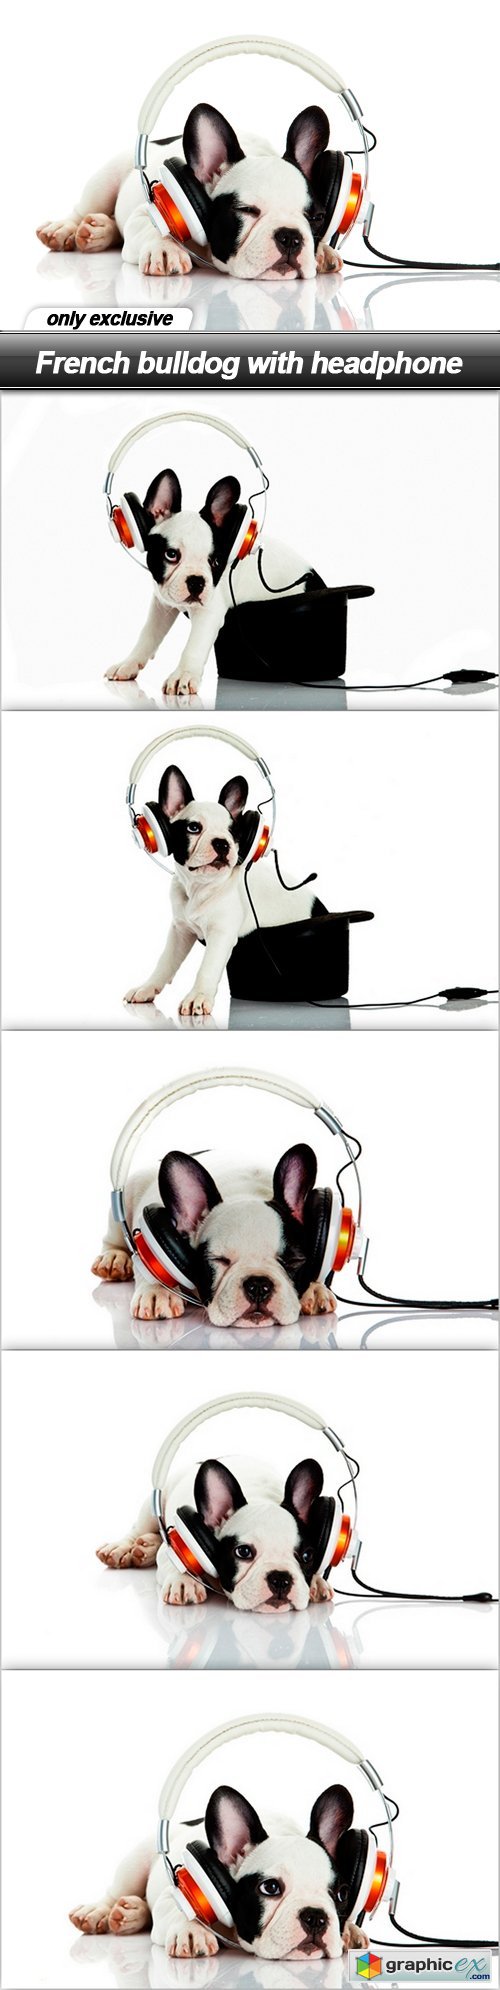 French bulldog with headphone - 6 UHQ JPEG